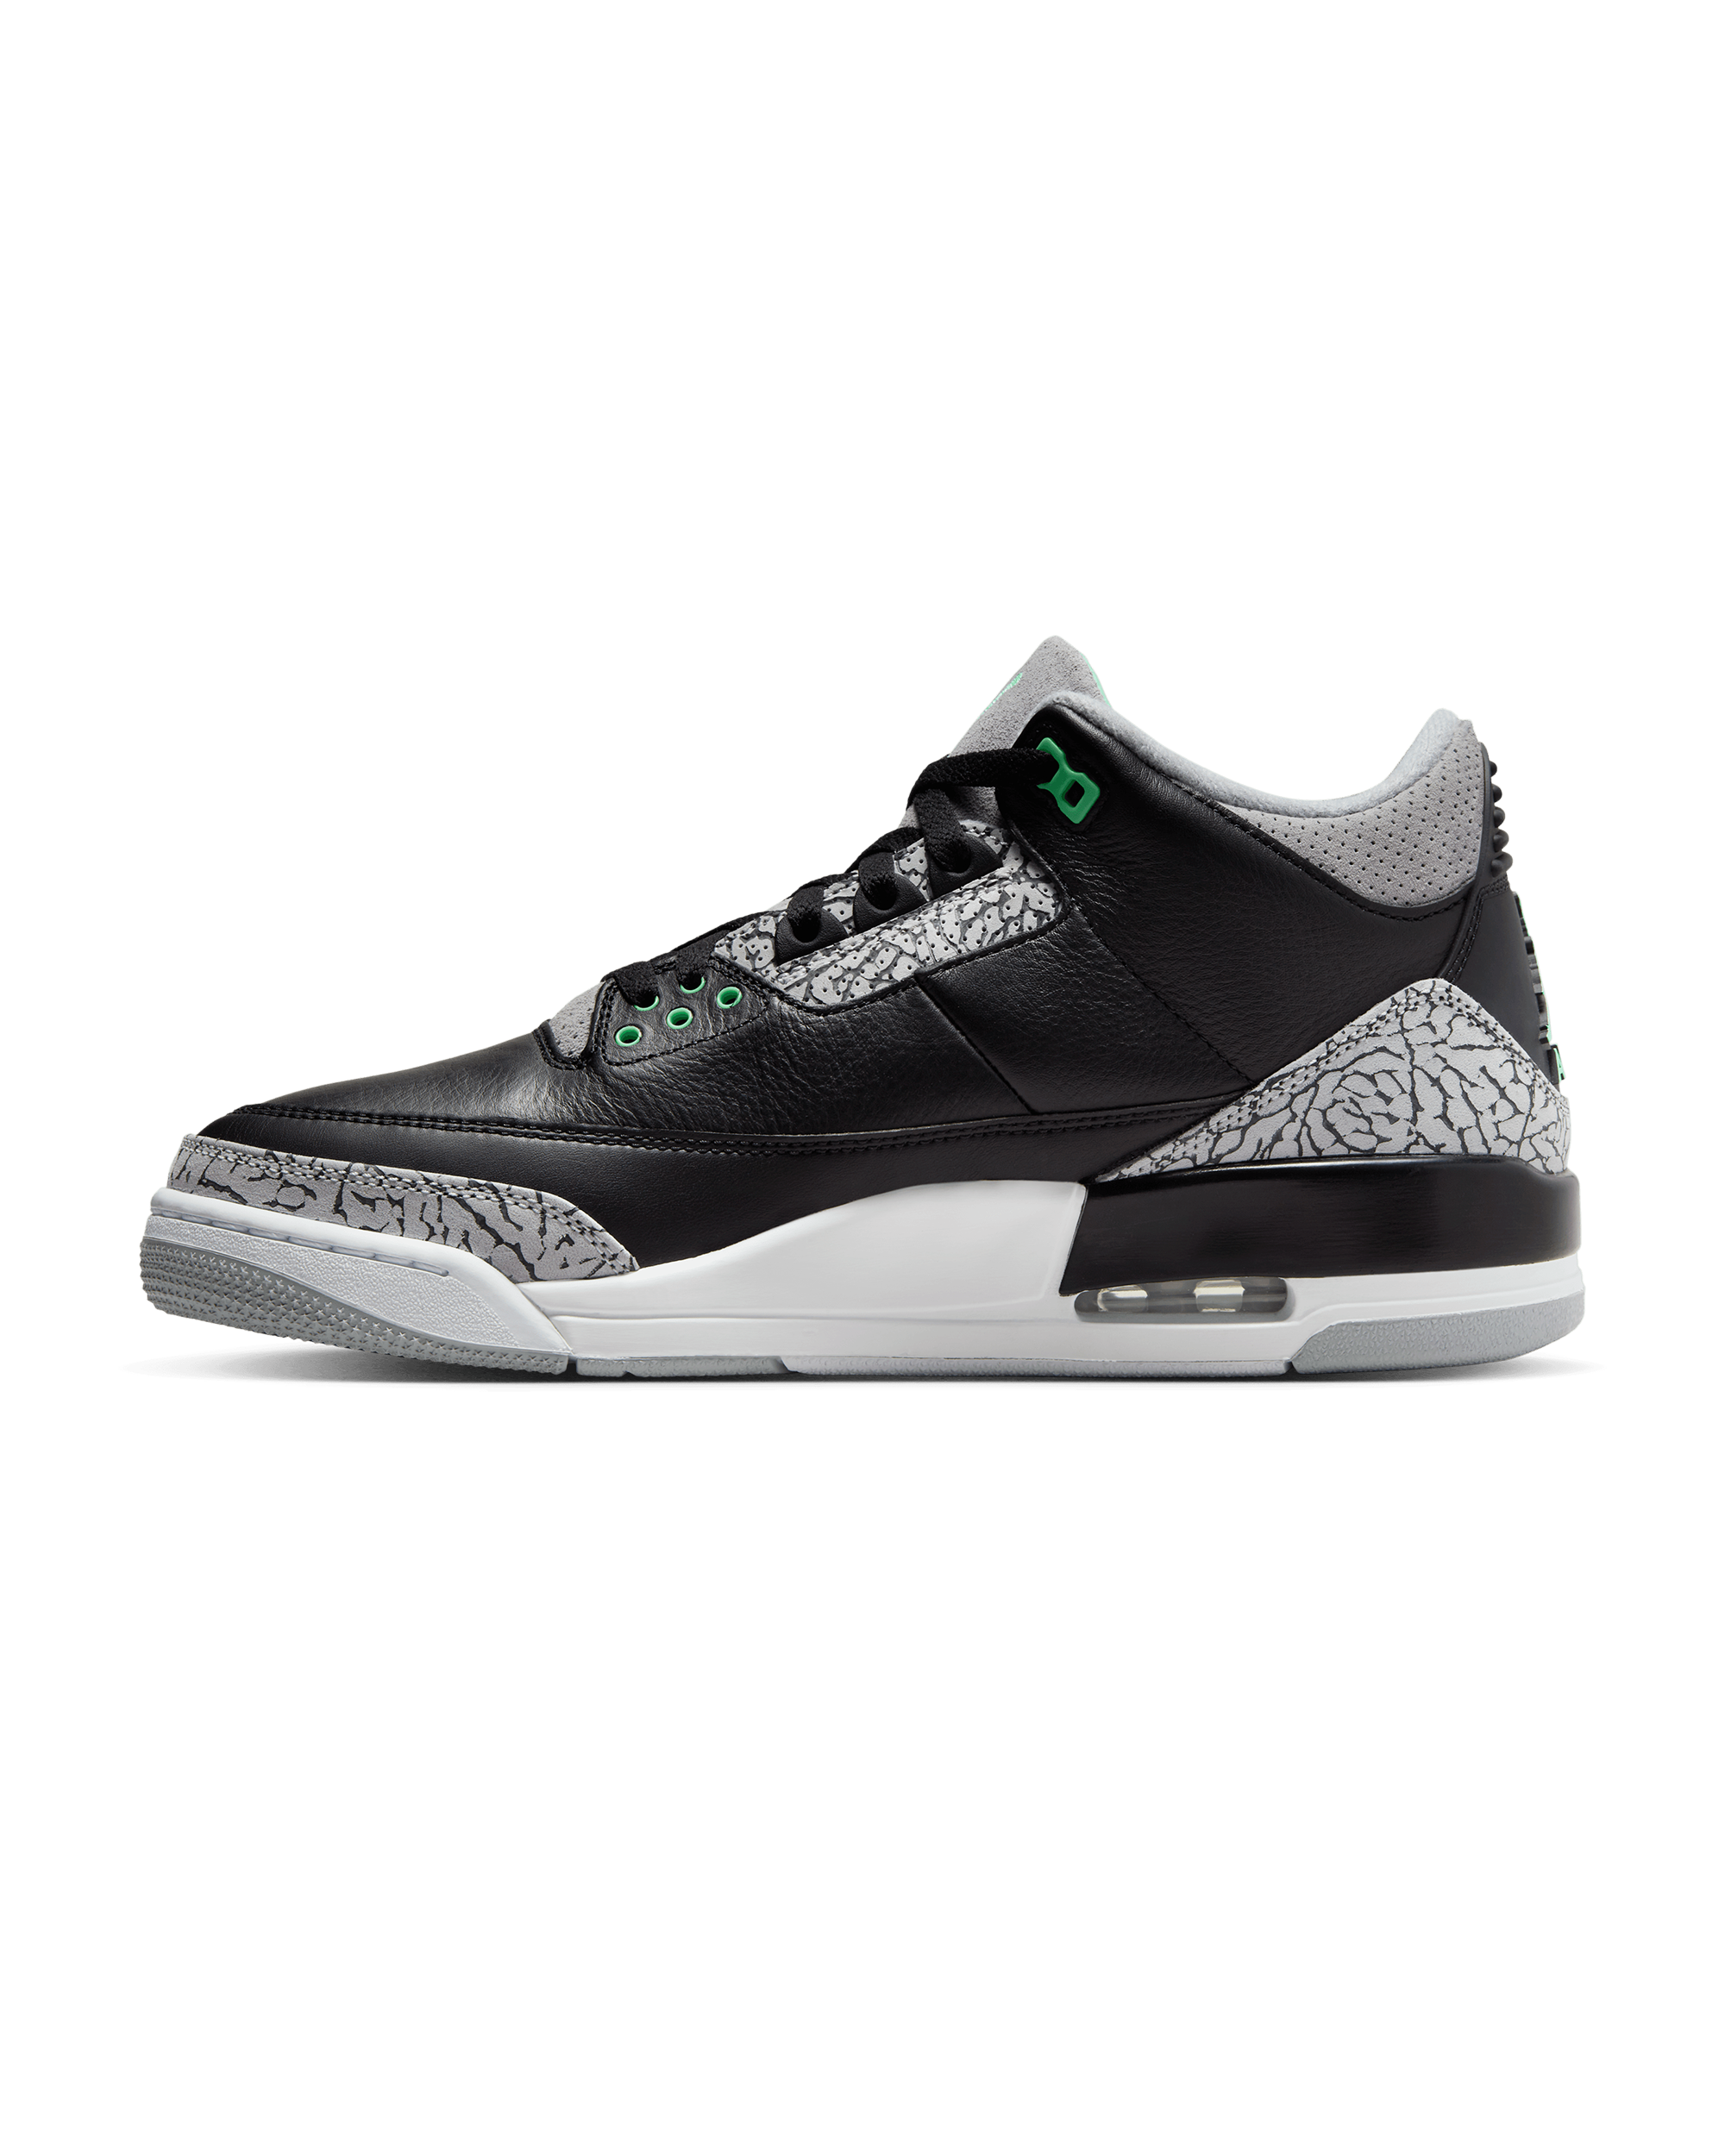 Air Jordan 3 Retro - Black / Wolf Grey / White / Green Glow